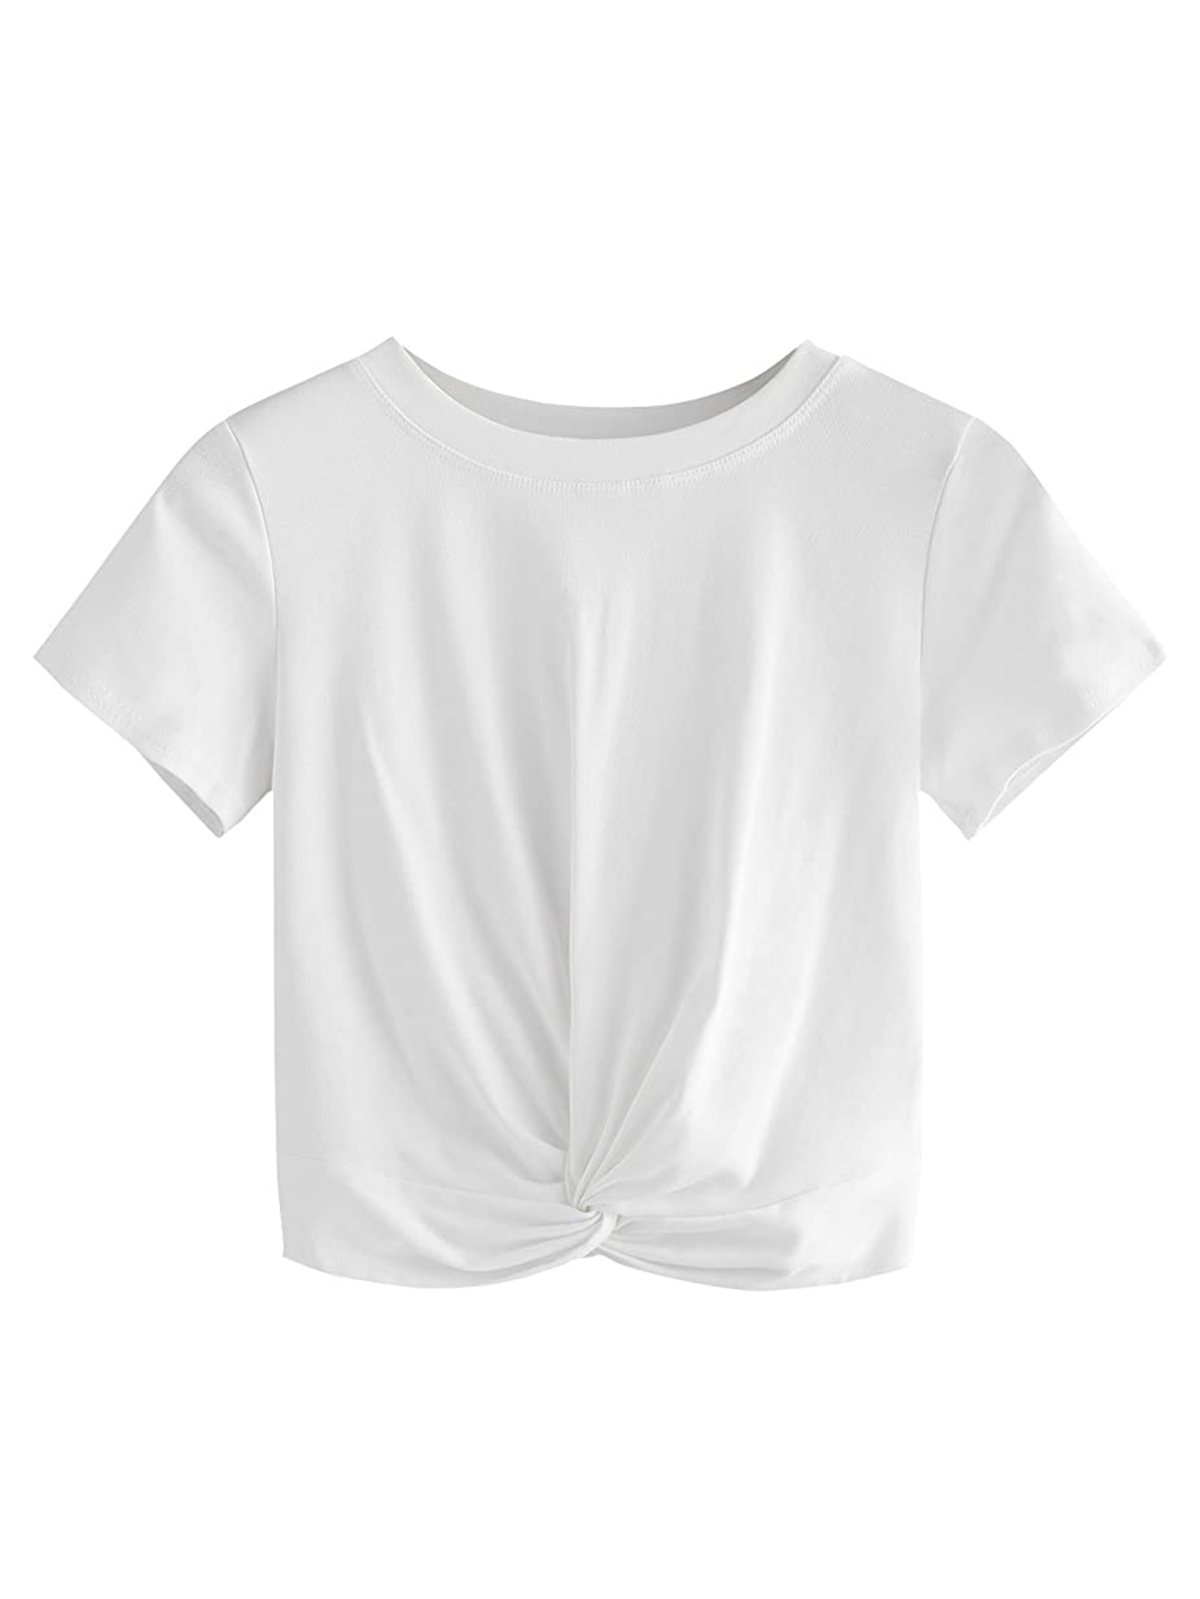 White T-Shirts on Amazon 